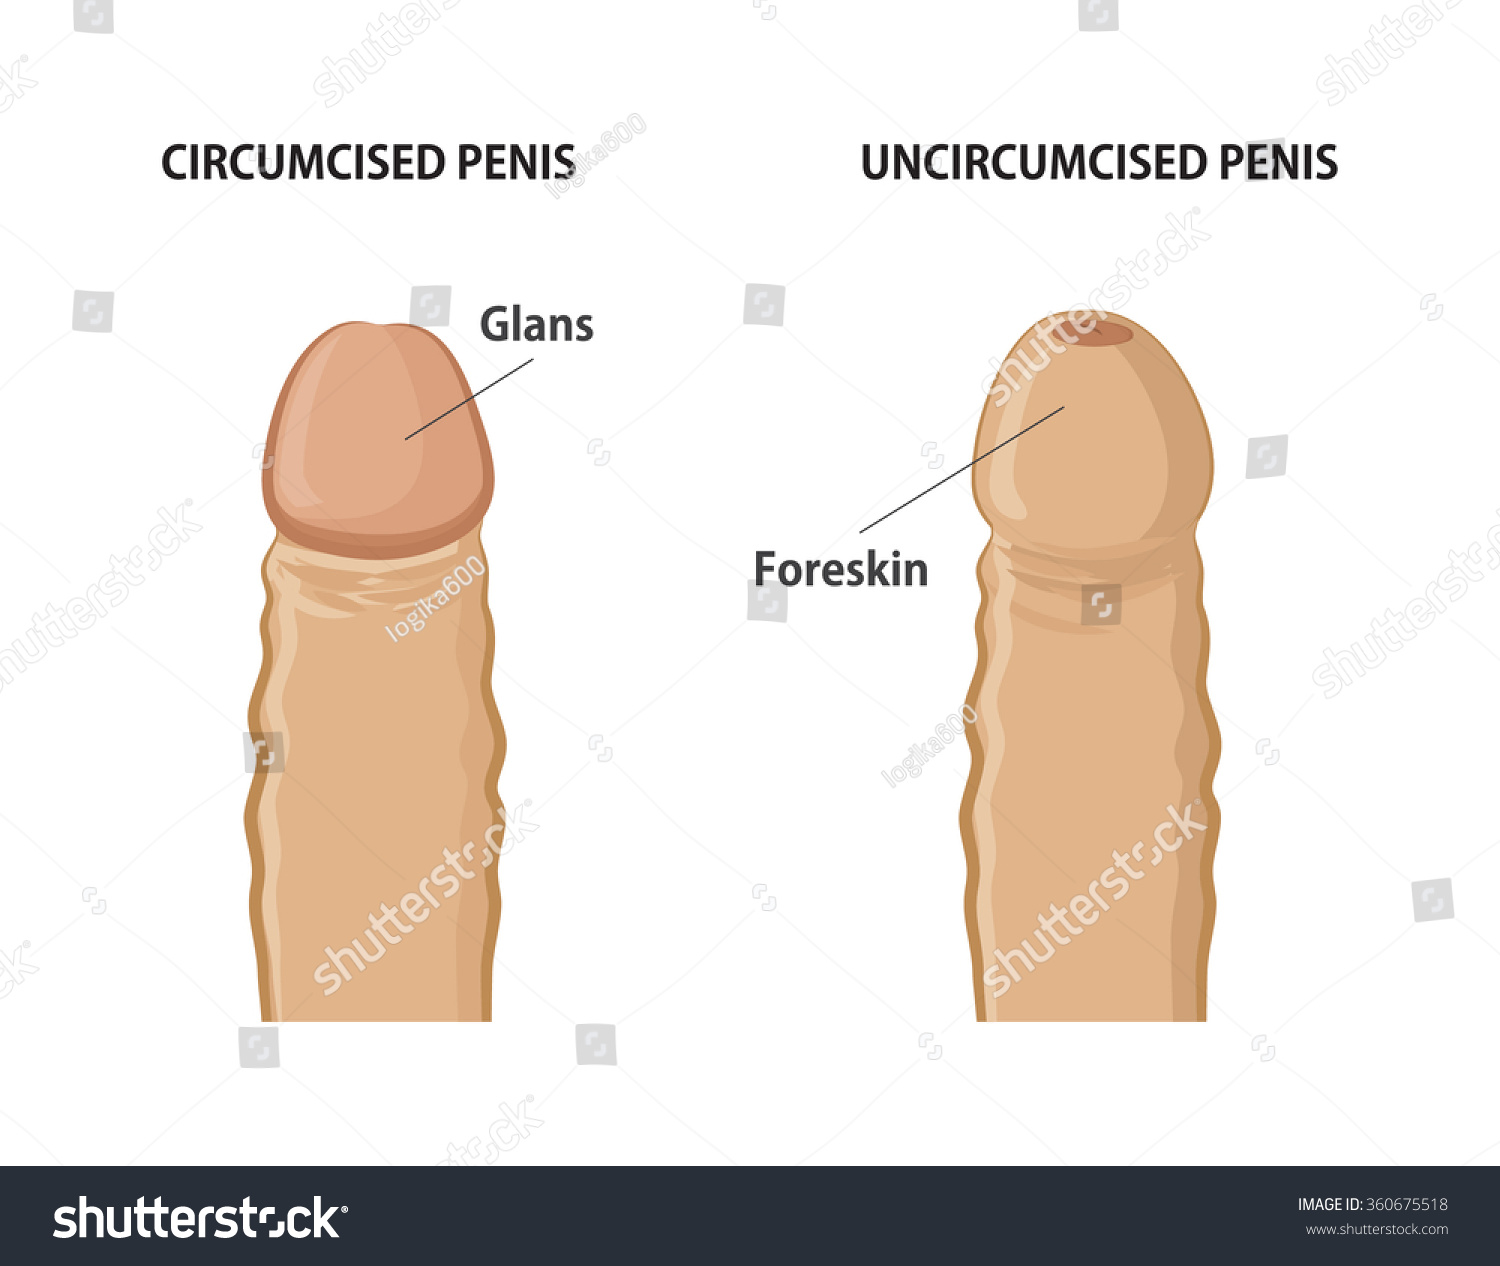 Circumsized Cock Images 81